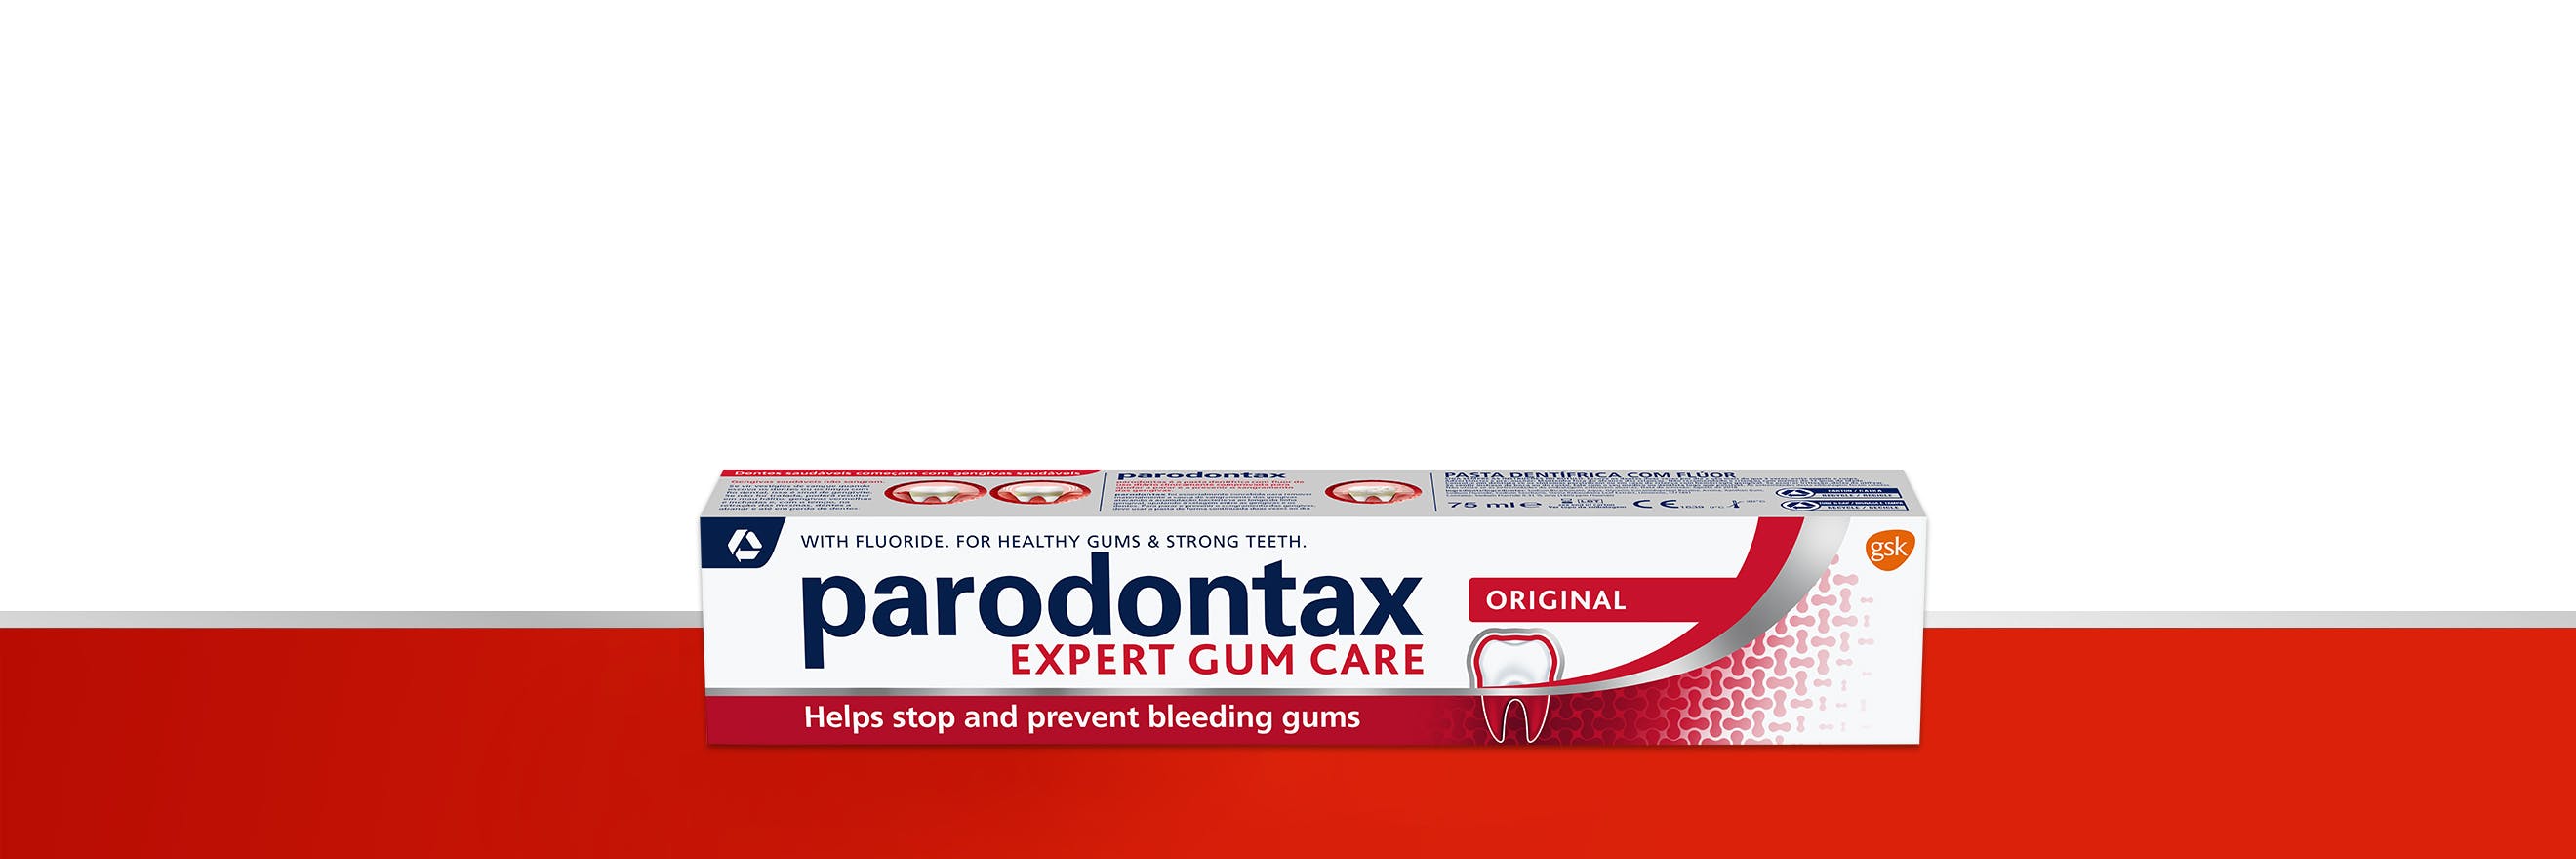 parodontax expert gum care toothpaste